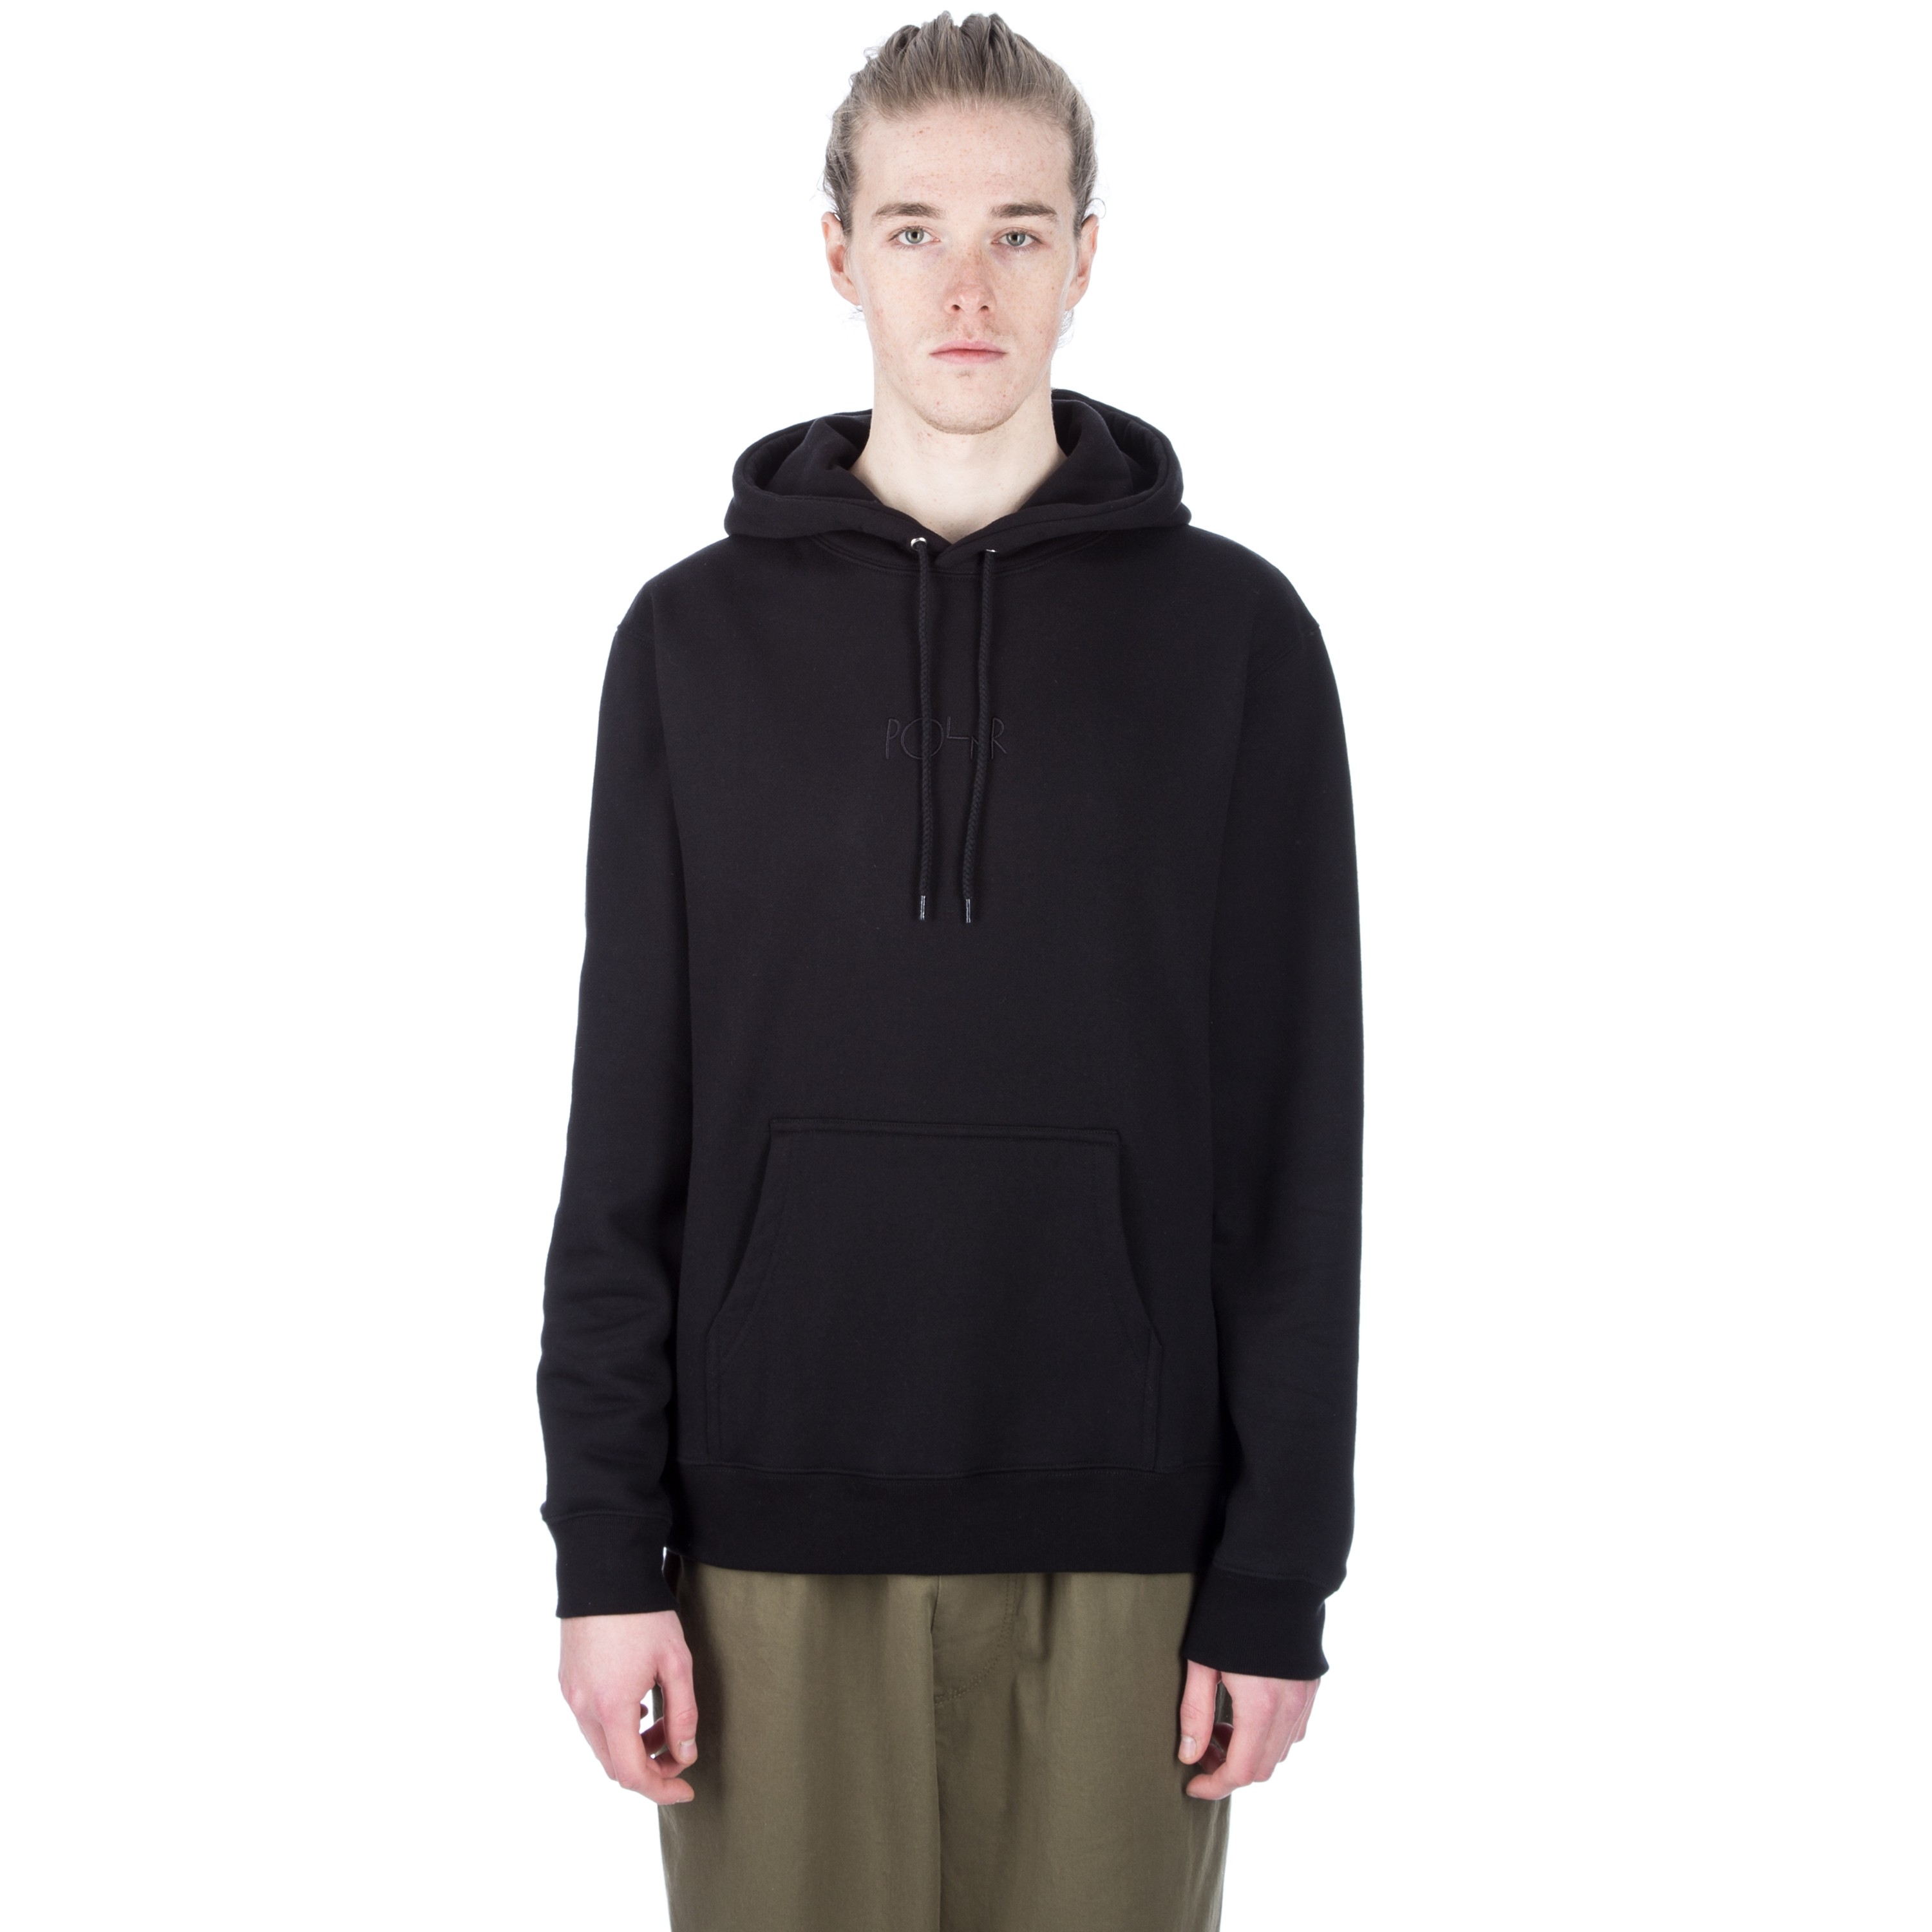 Polar Heavyweight Pullover Hooded Sweatshirt (Black) - Consortium.